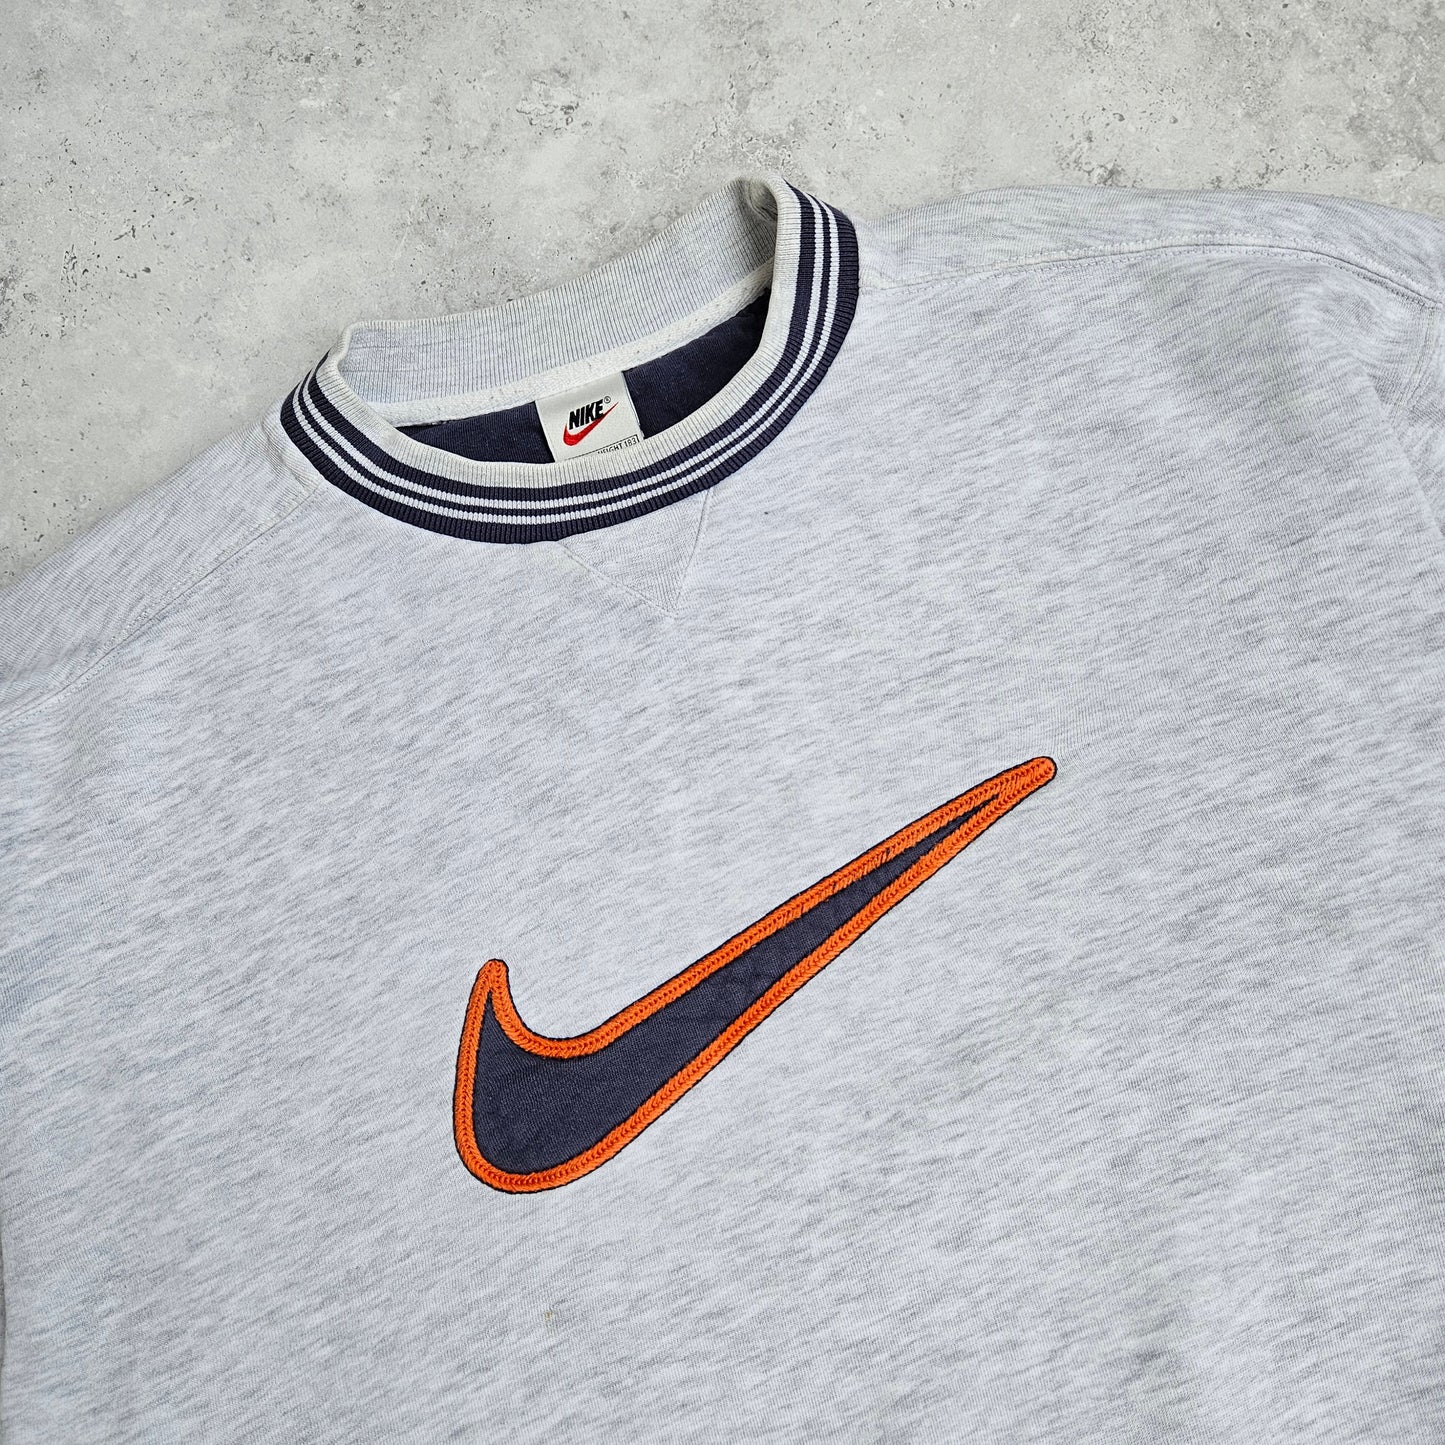 Vintage Nike Big Swoosh Sweatshirt (M)